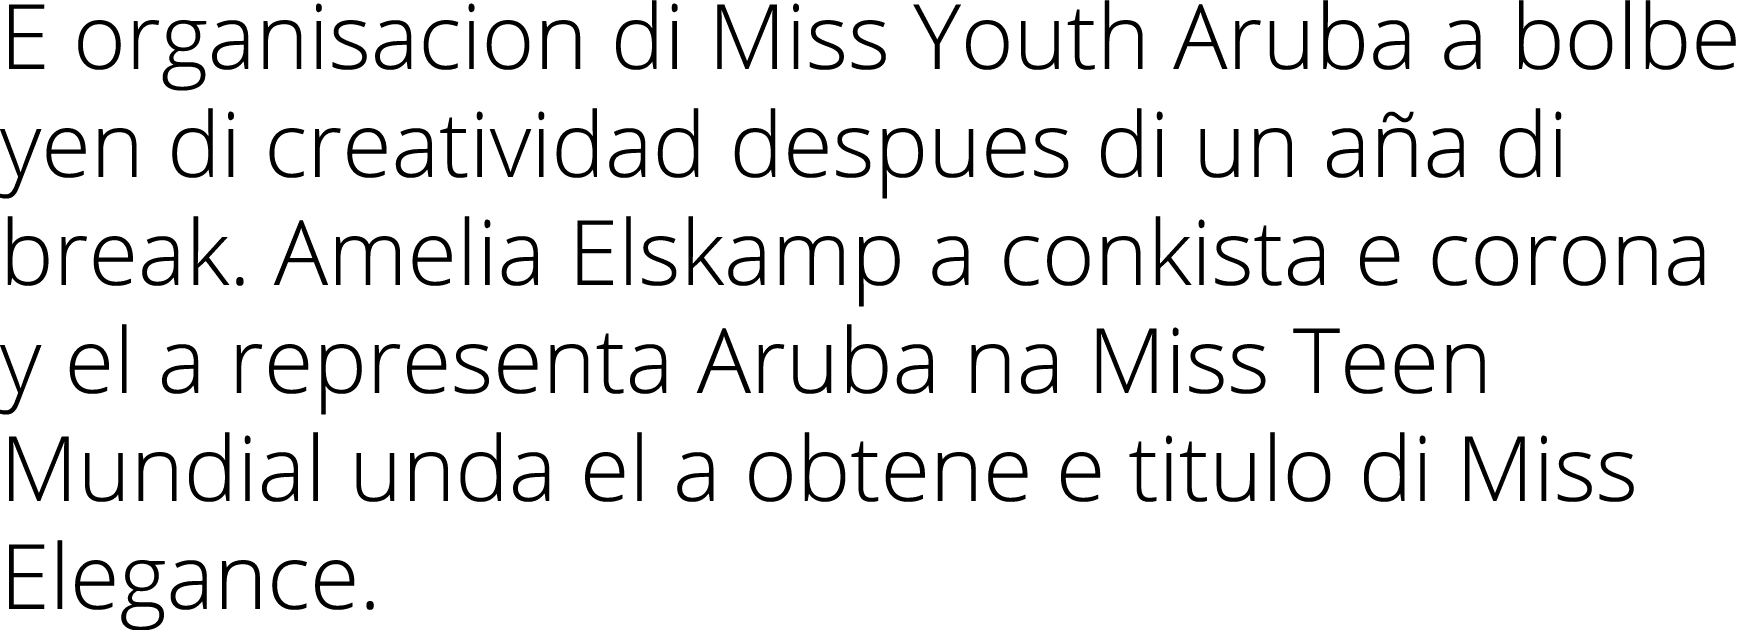 E organisacion di Miss Youth Aruba a bolbe yen di creatividad despues di un a a di break. Amelia Elskamp a conkista e...